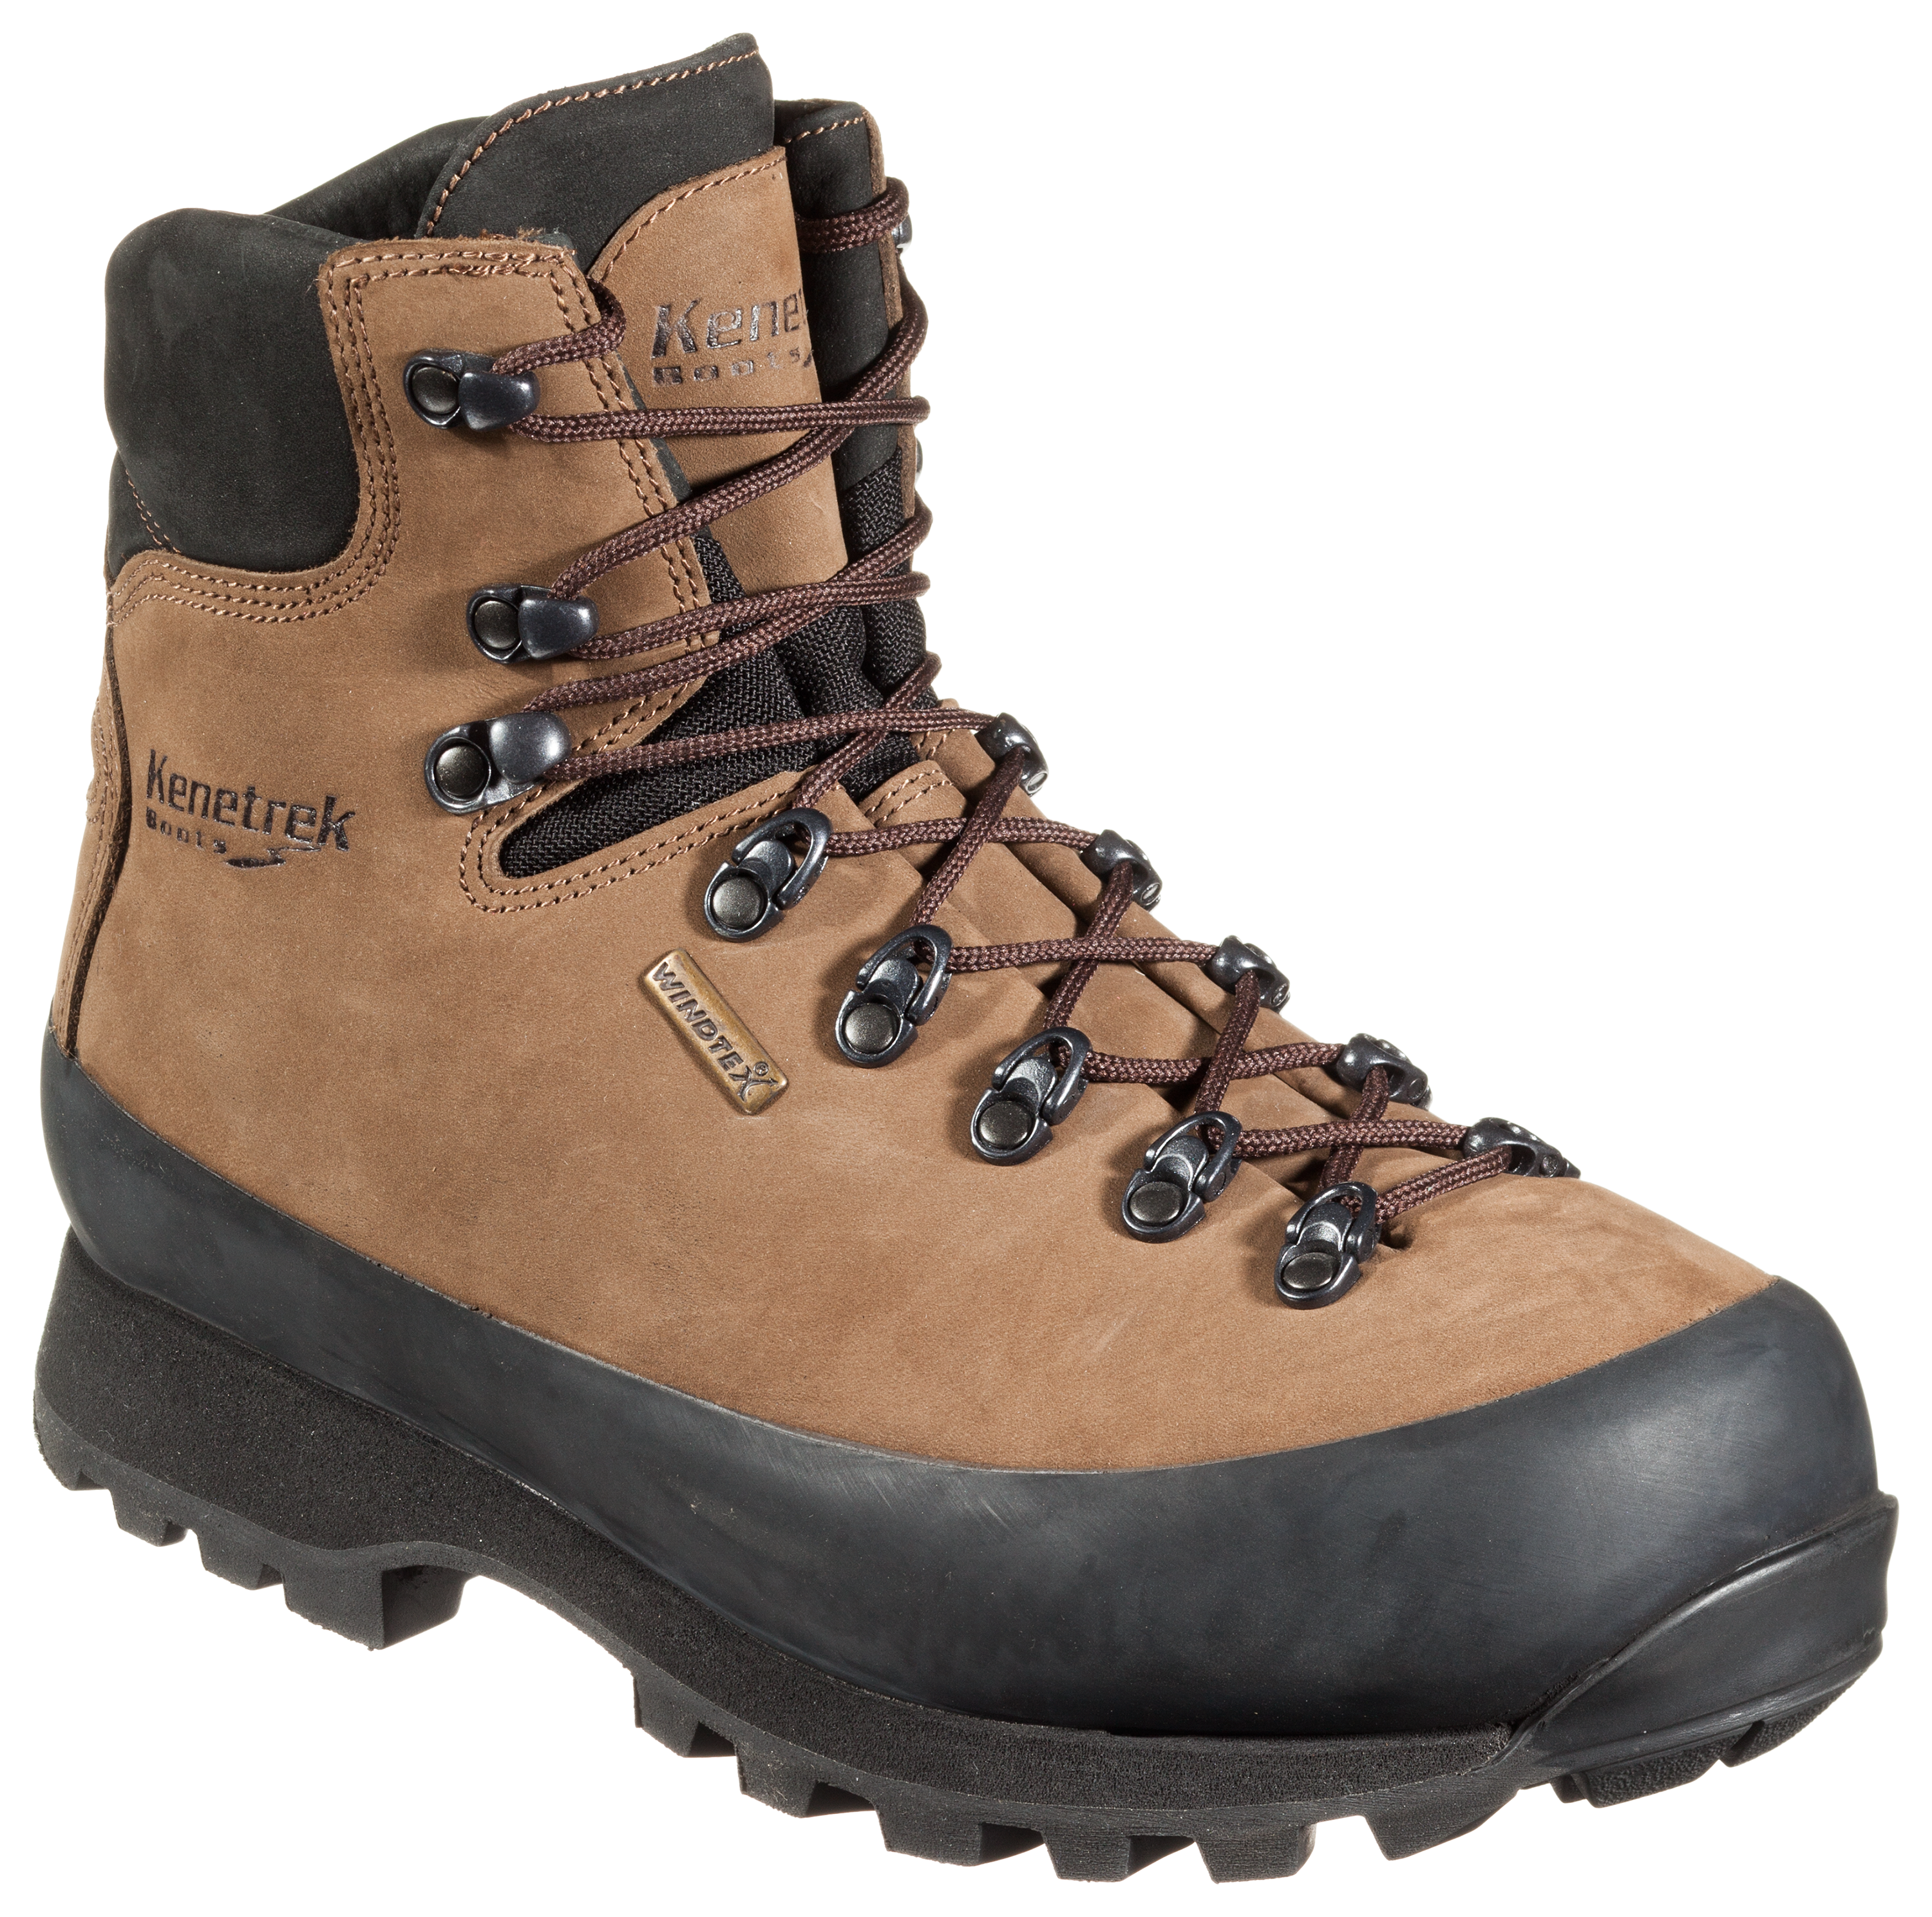 Kenetrek Hardscrabble Waterproof Hiking Boots for Men - Brown - 8 5M